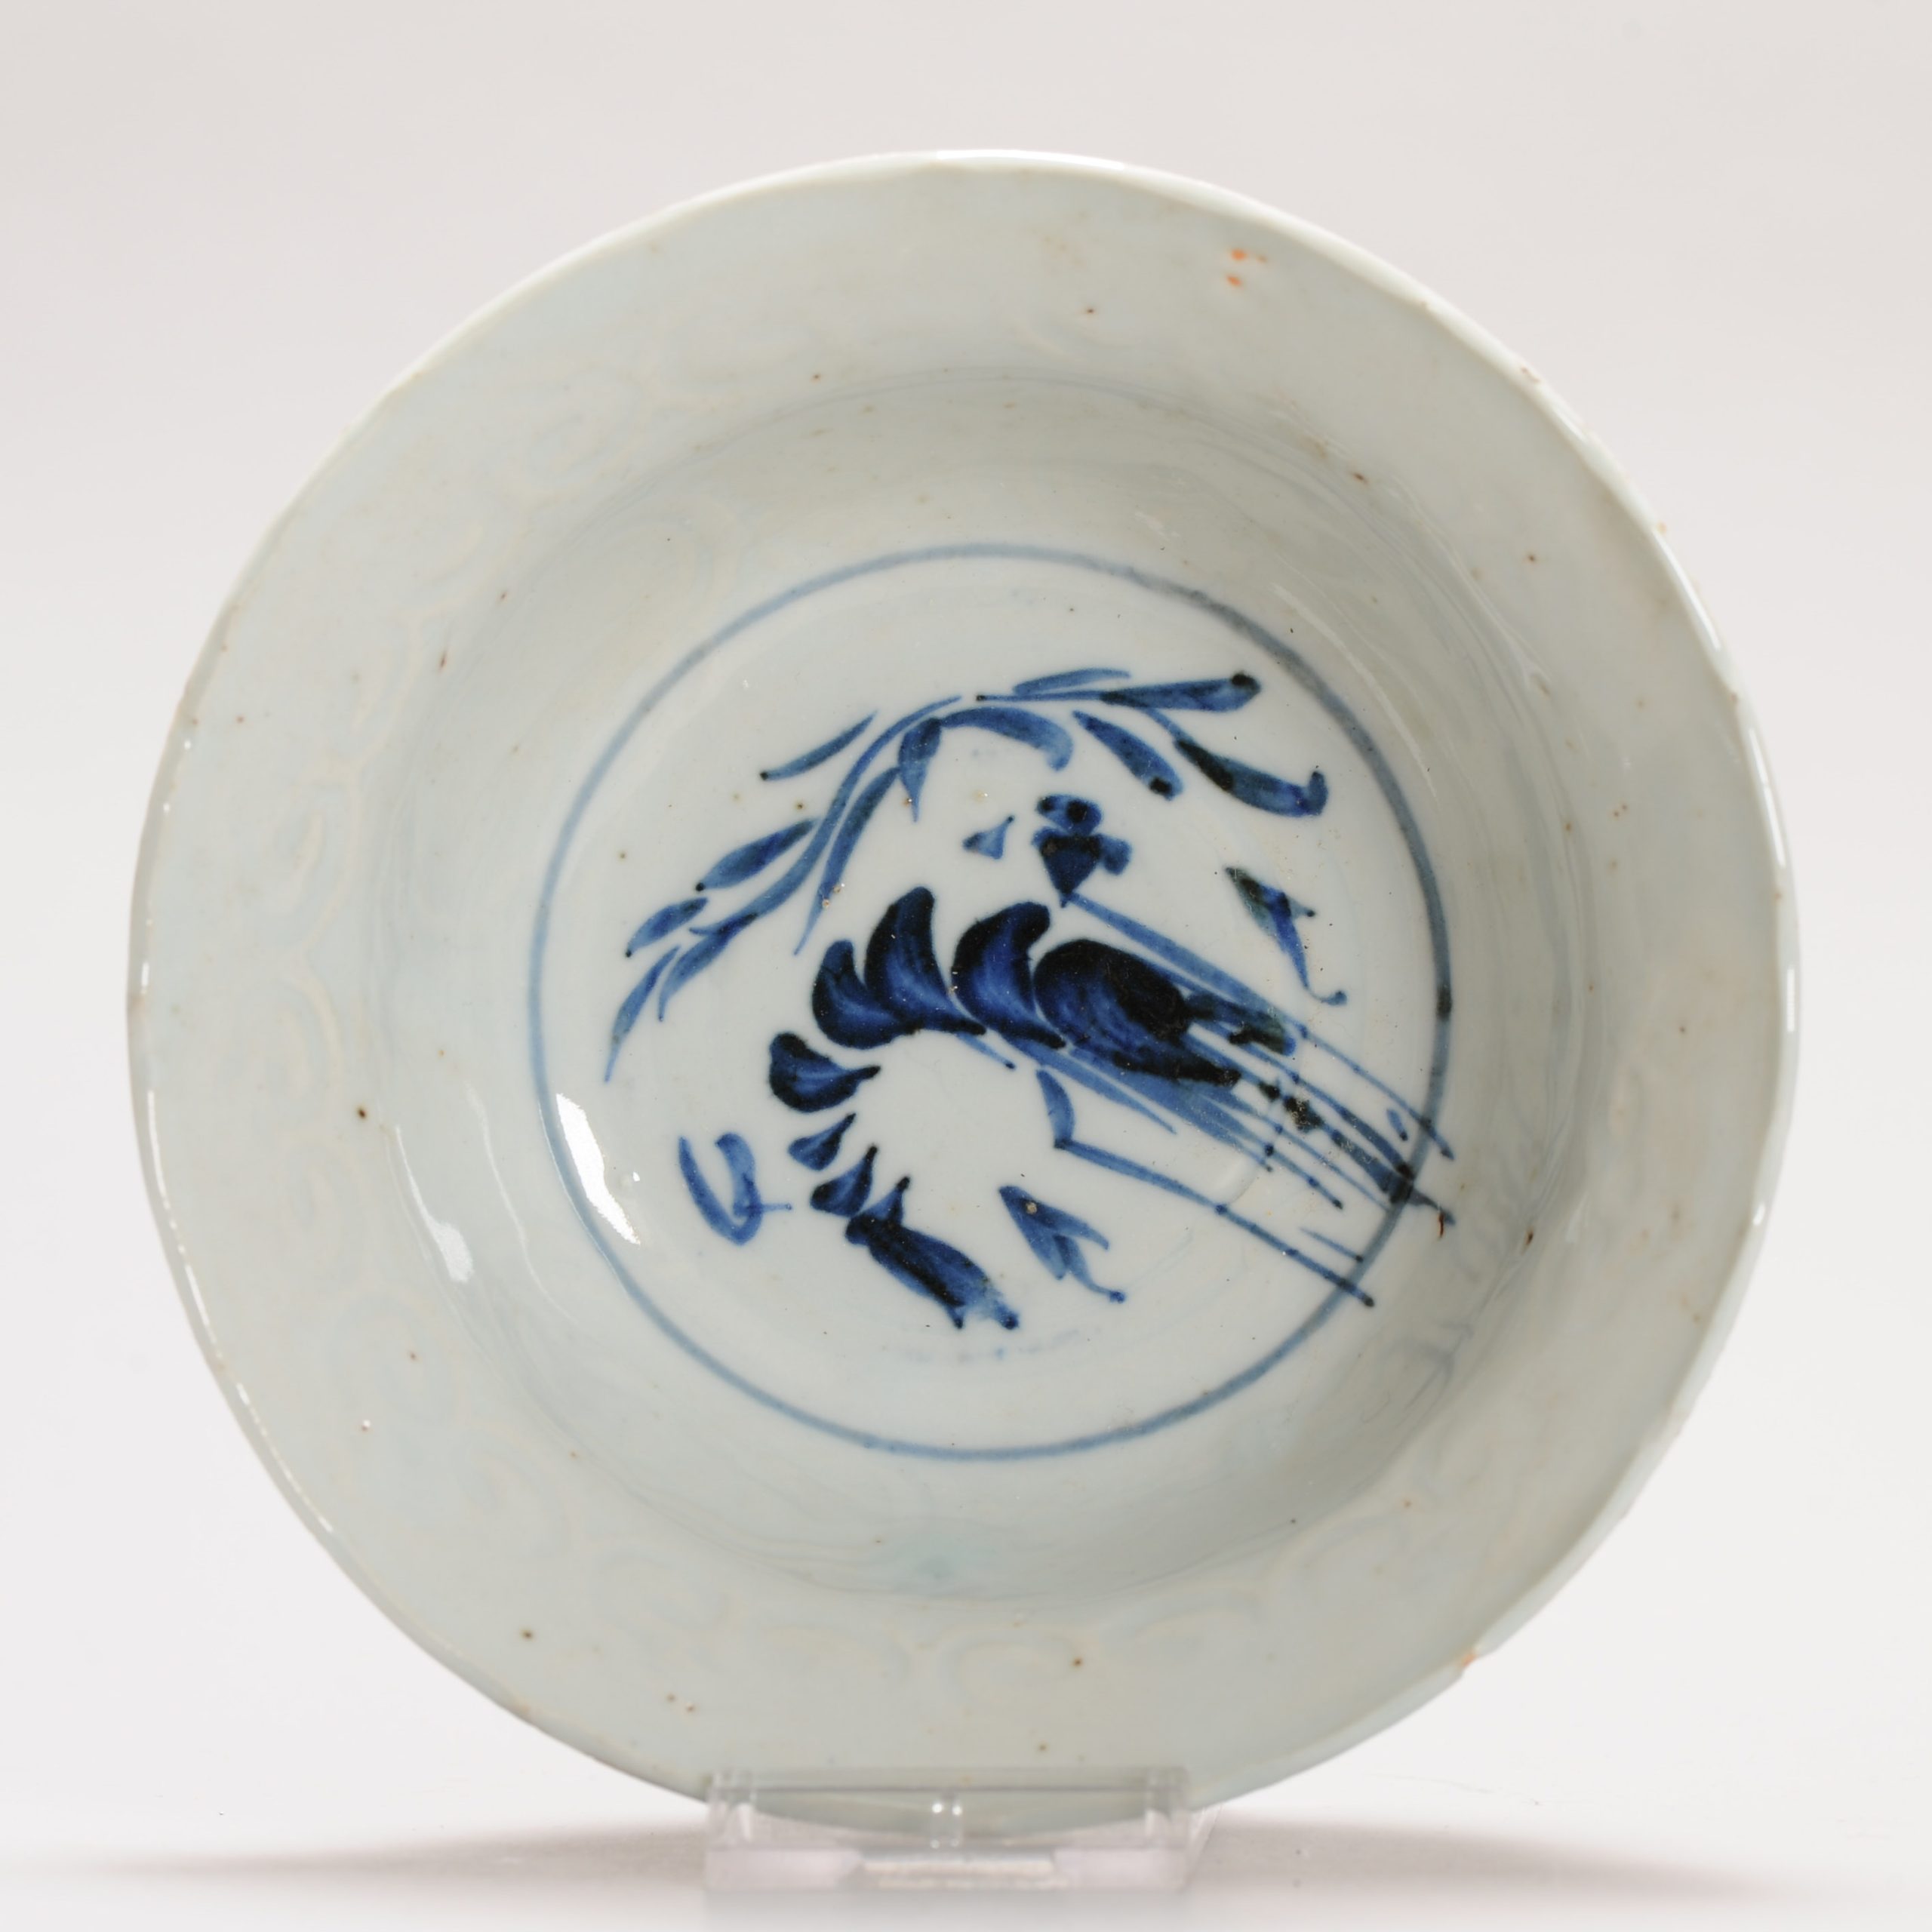 1279 Lovely Ming Kraak Klapmuts Bowl with Blue and White Shrimp decoration